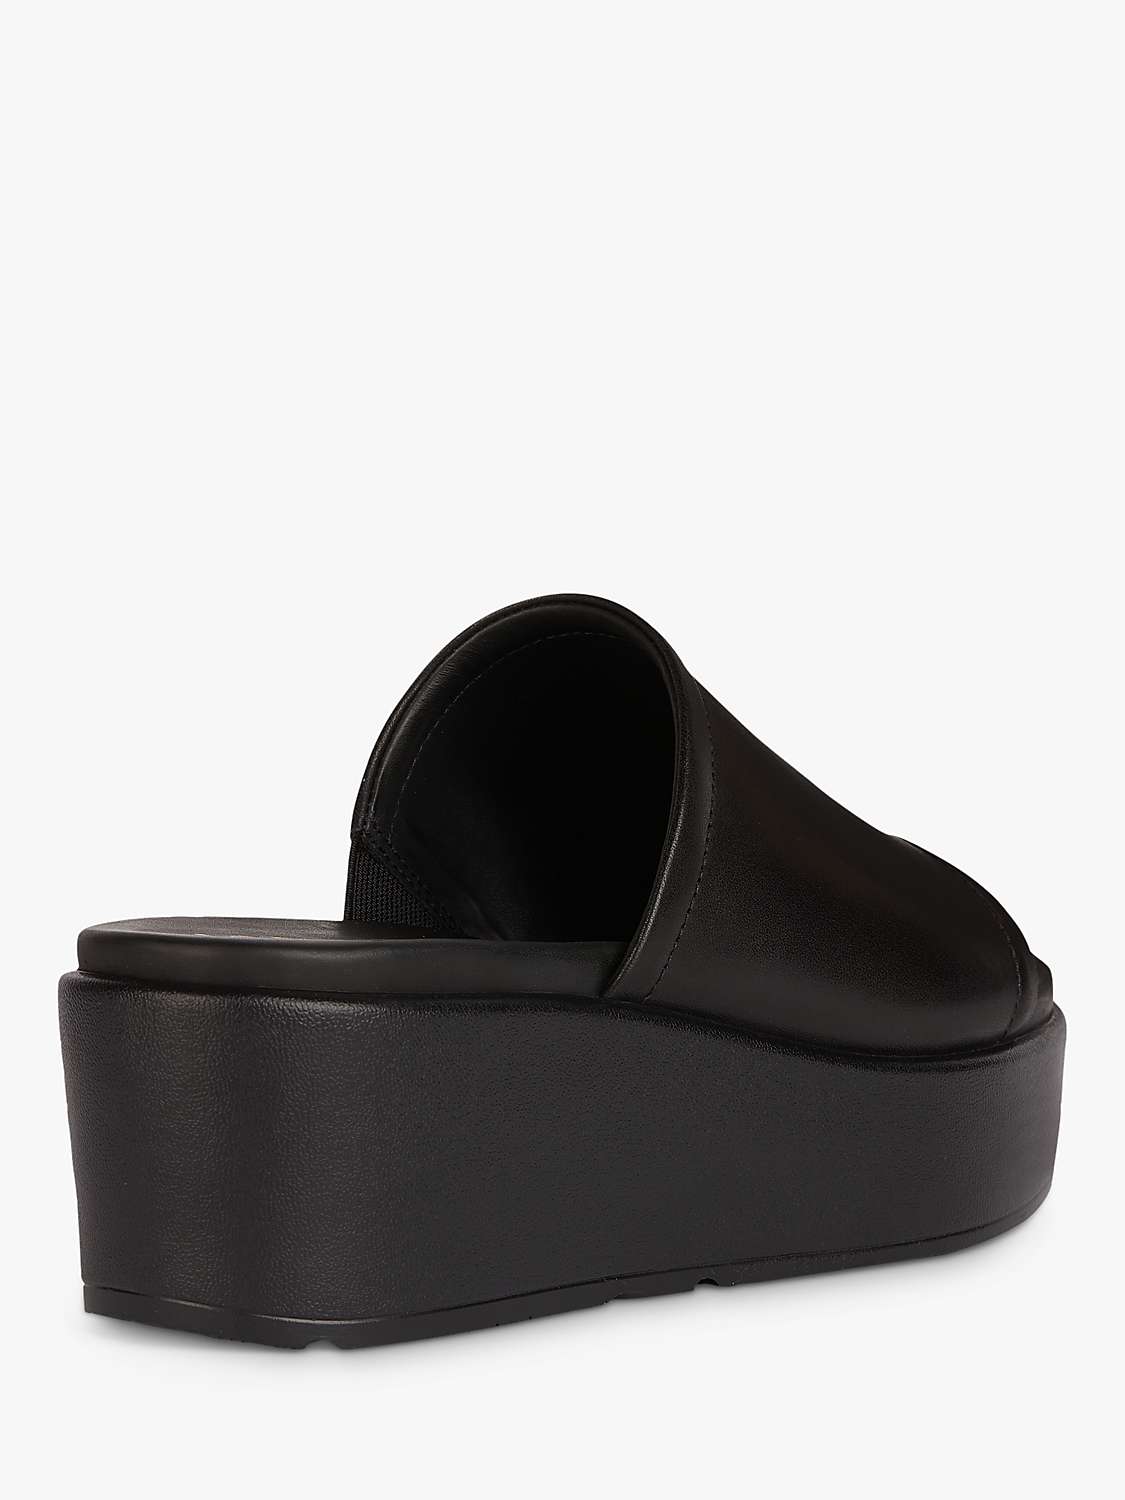 Buy Geox Xand 2.2S Leather Platform Wedge Sandals, Black Online at johnlewis.com